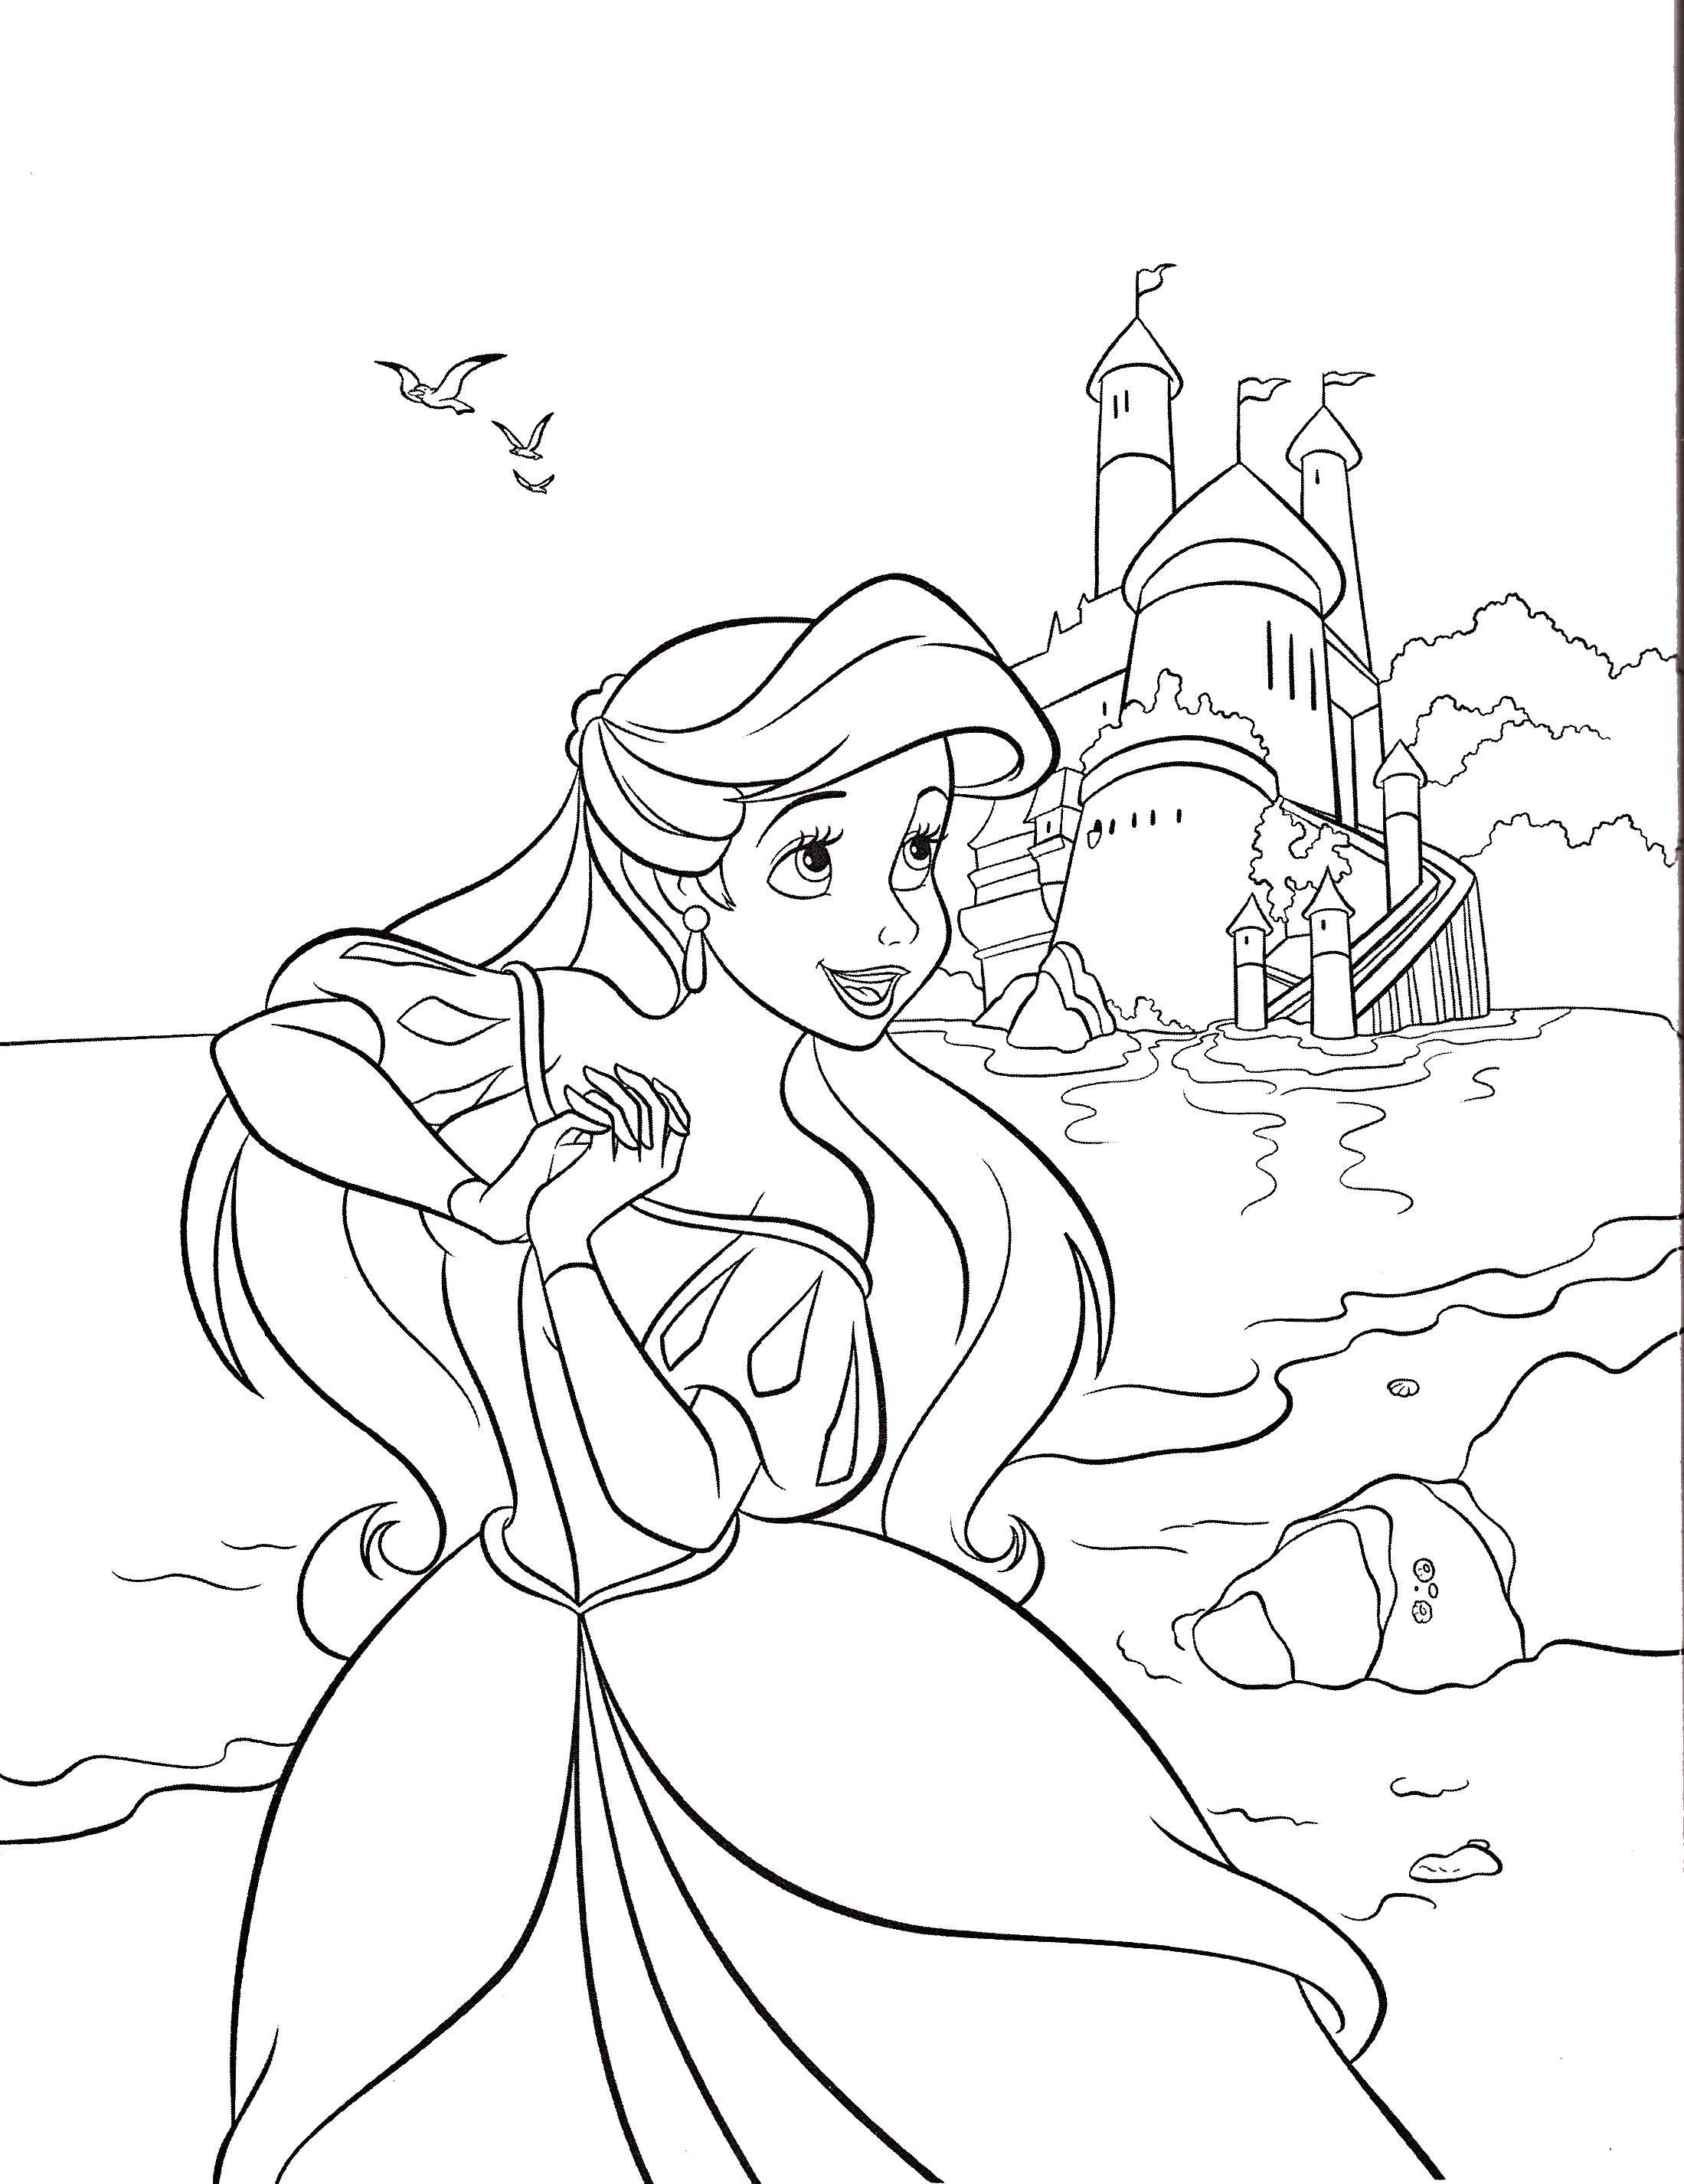 Coloring Ariel the sea. Category The little mermaid. Tags:  mermaid, Princess, Ariel.